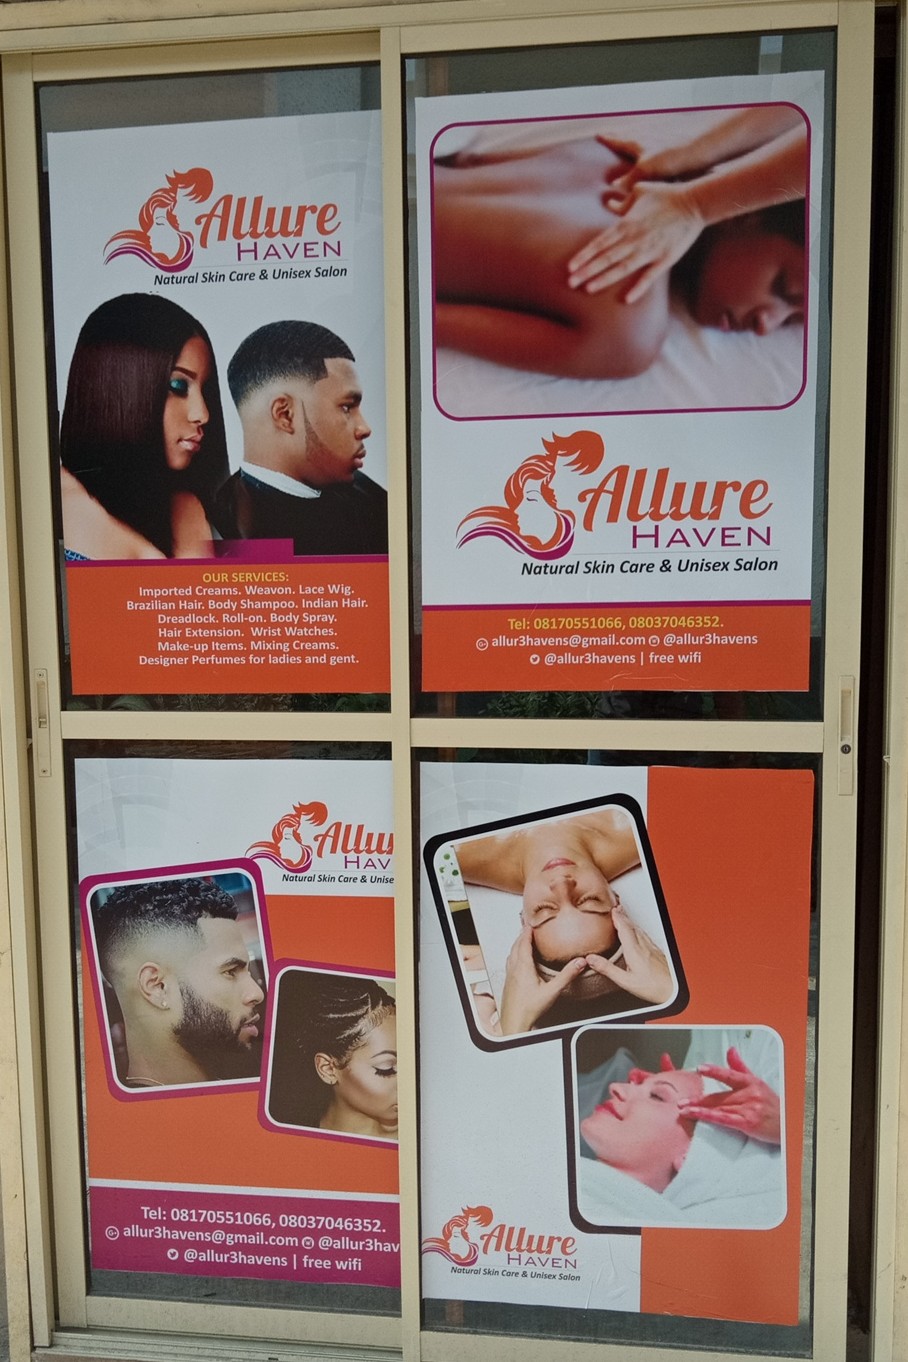 Allure Haven Natural skincare & Unisex Salon